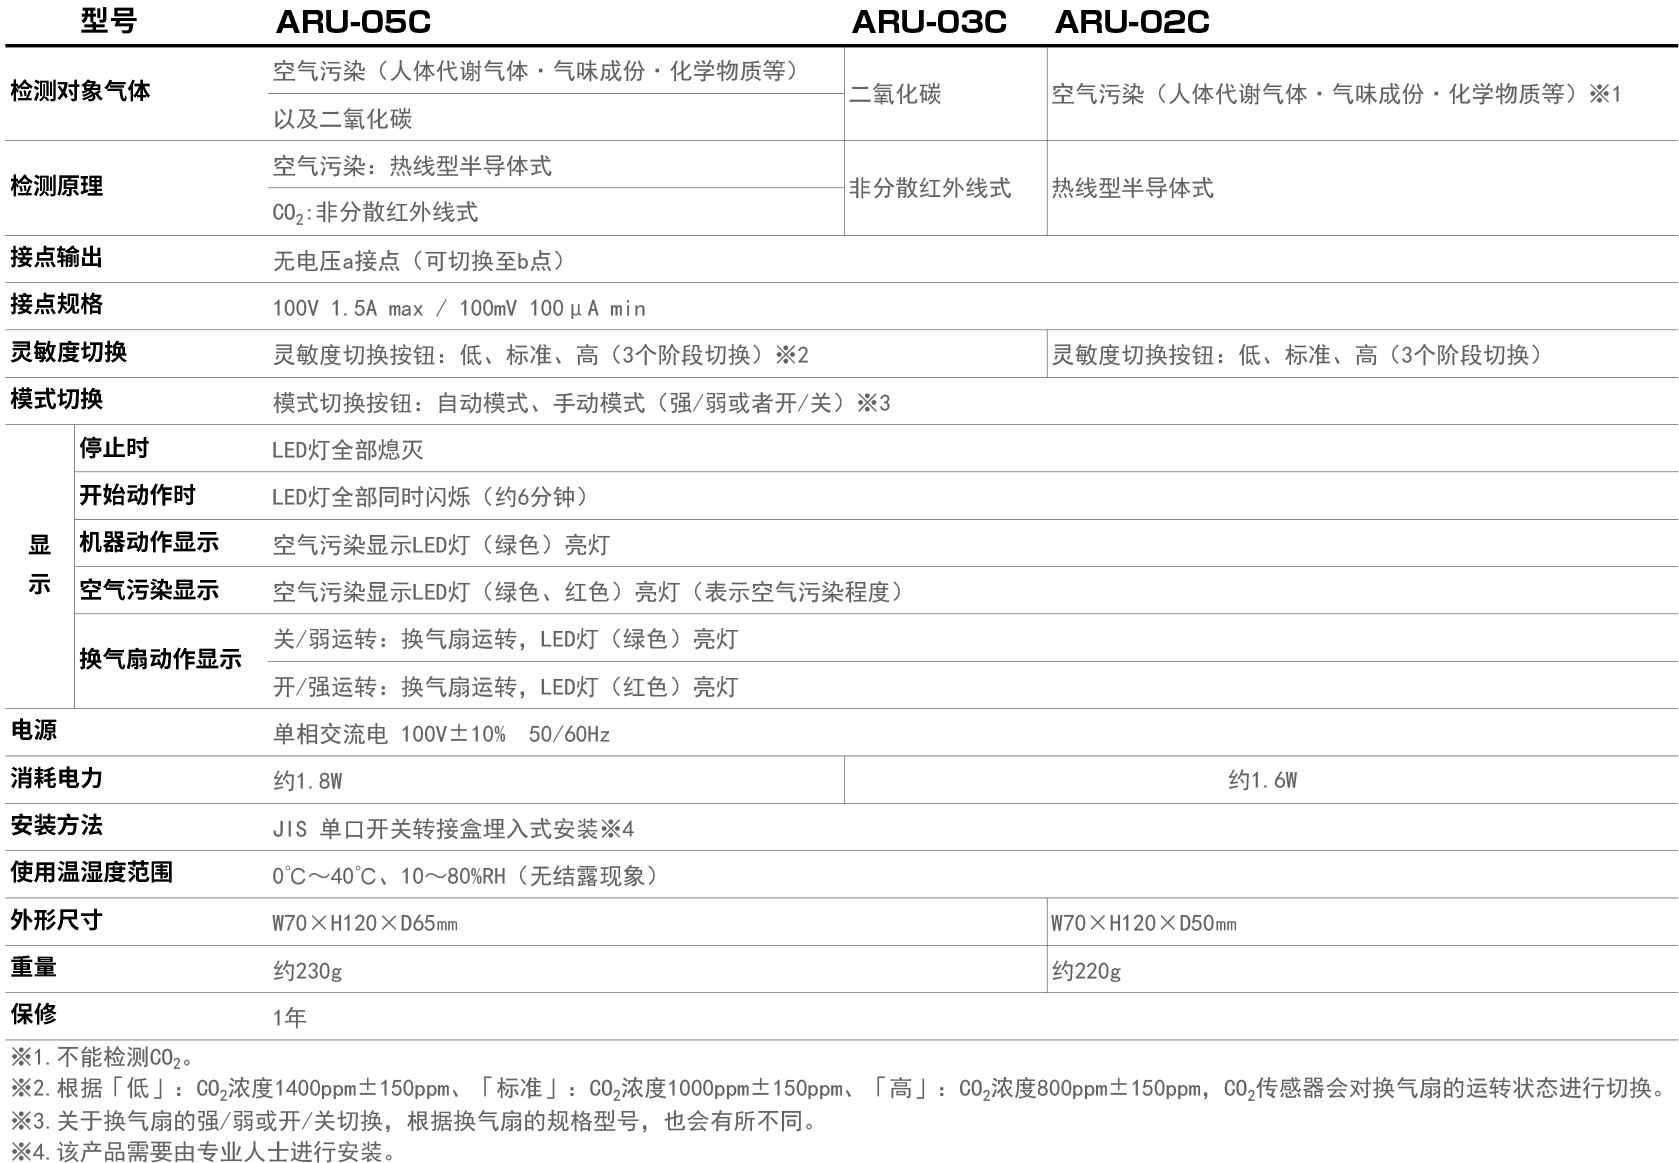 ARU-05C/03C/02C产品参数